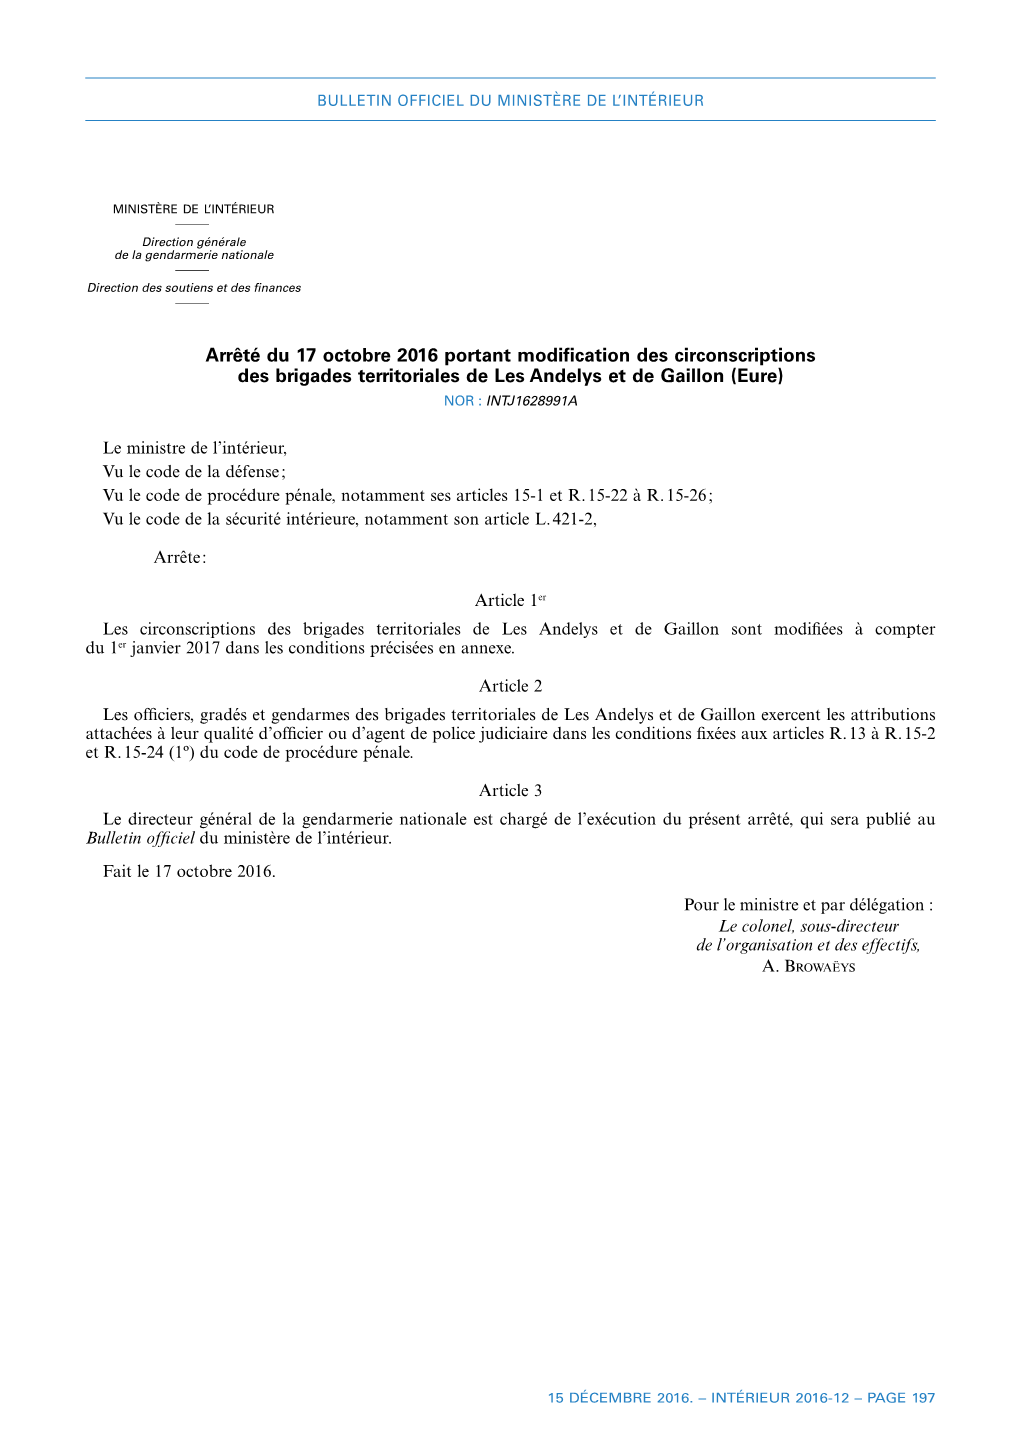 Arrêté Du 17 Octobre 2016 Portant Modification Des Circonscriptions Des Brigades Territoriales De Les Andelys Et De Gaillon